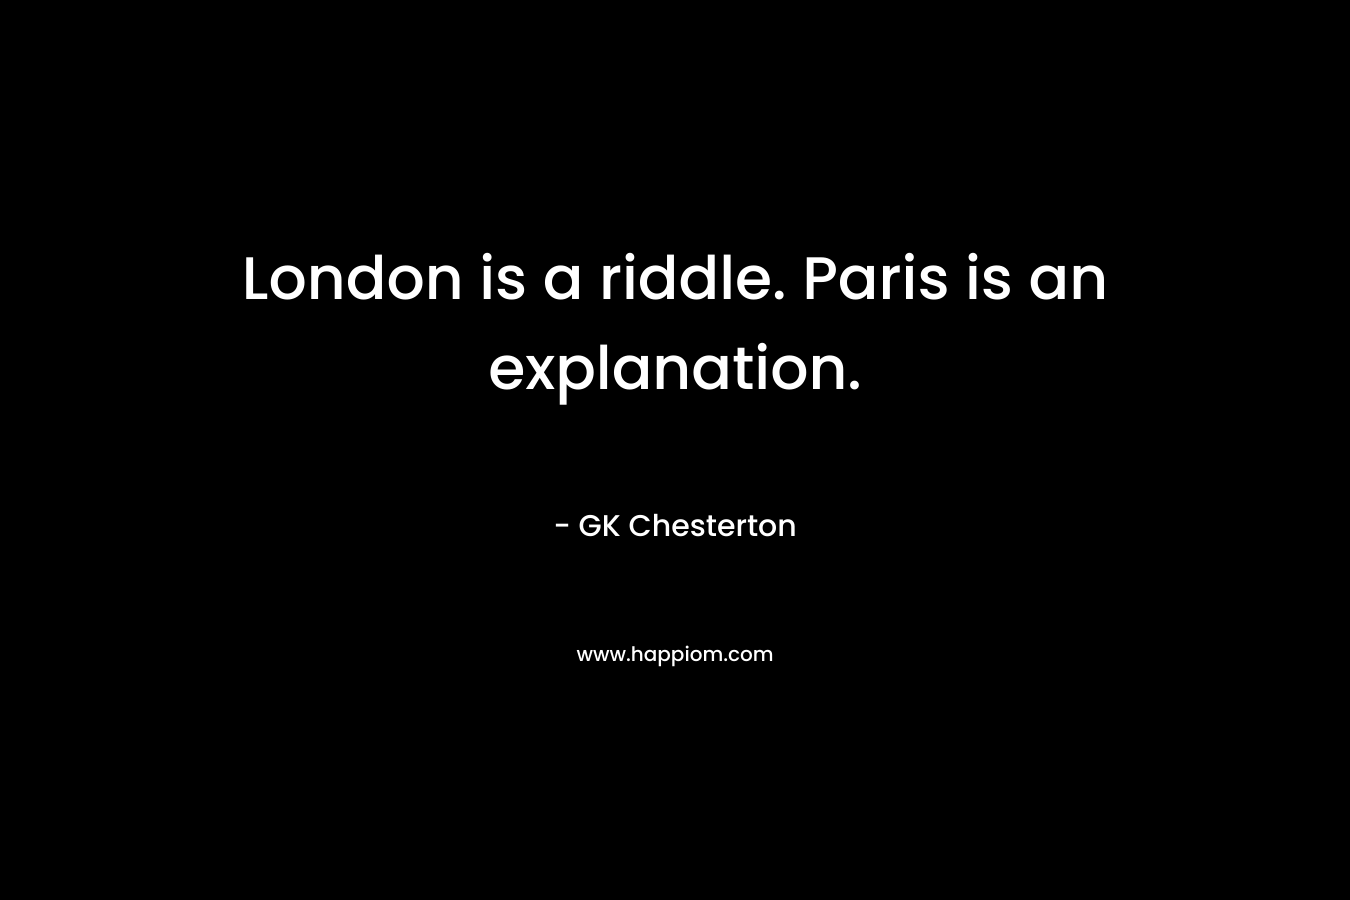 London is a riddle. Paris is an explanation.